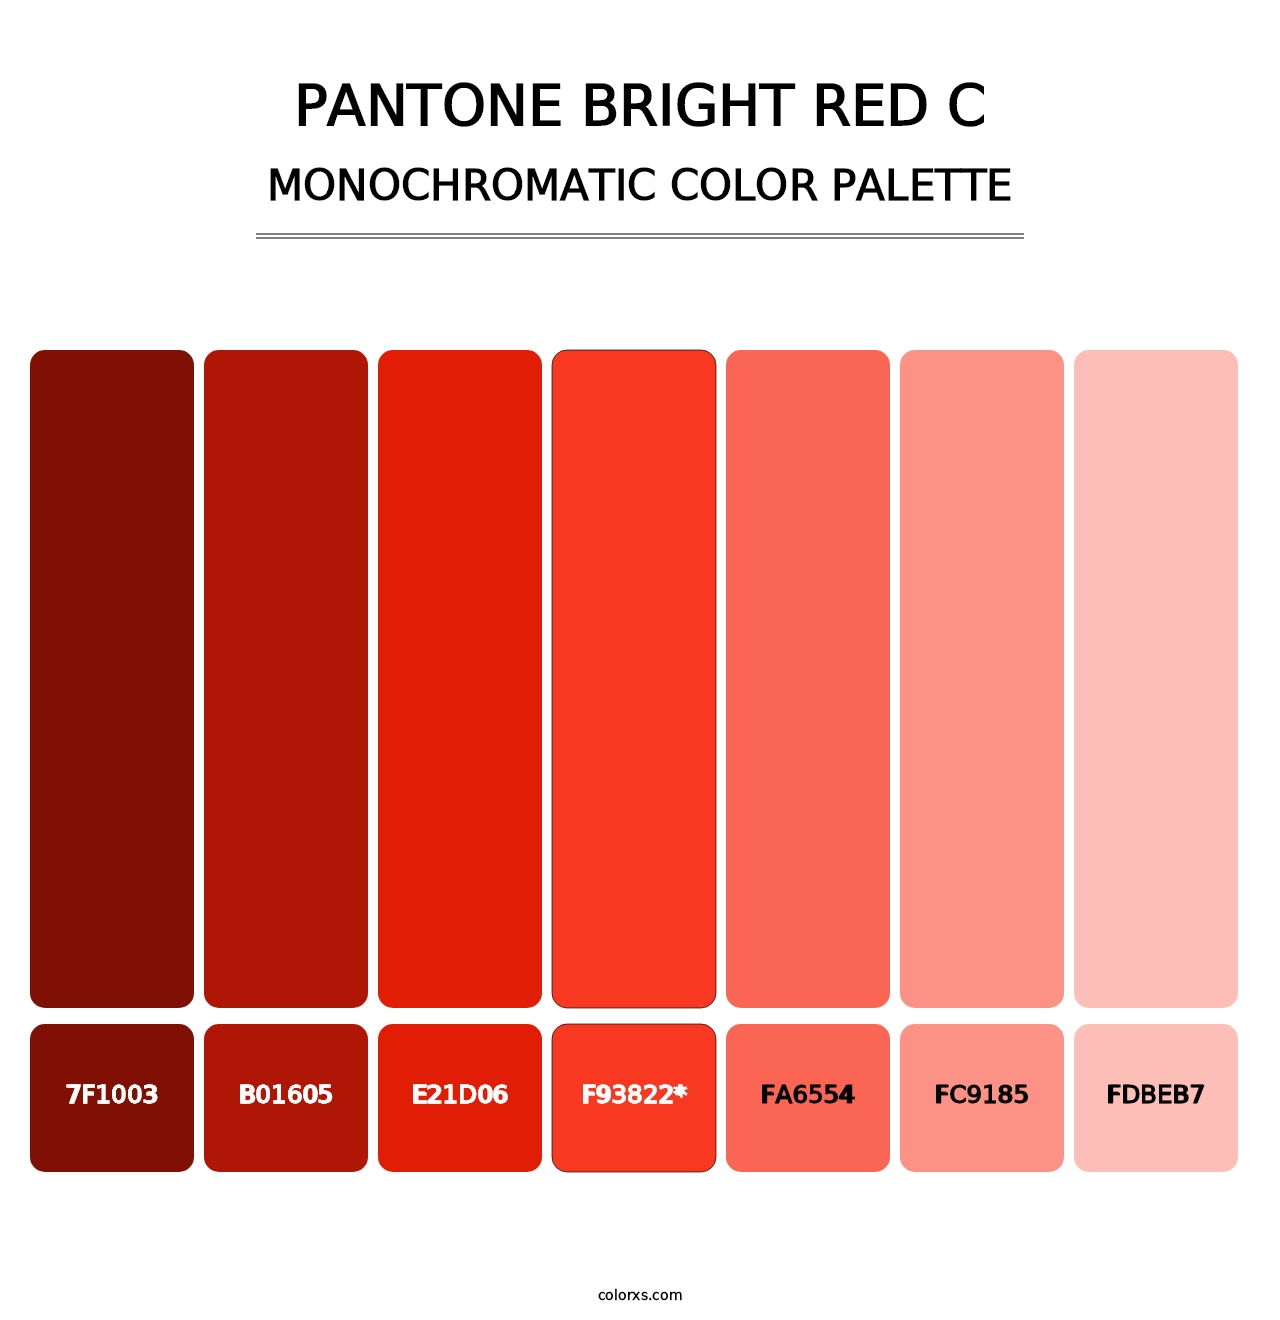 PANTONE Bright Red C - Monochromatic Color Palette